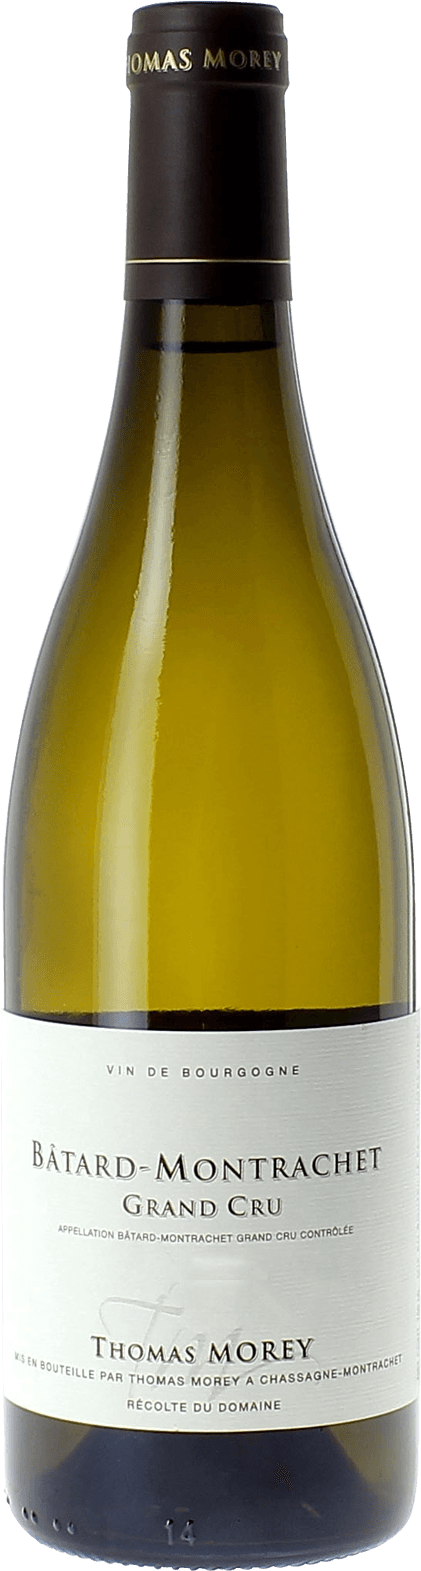 Batard  montrachet grand cru 2017 Domaine MOREY Thomas, Bourgogne blanc